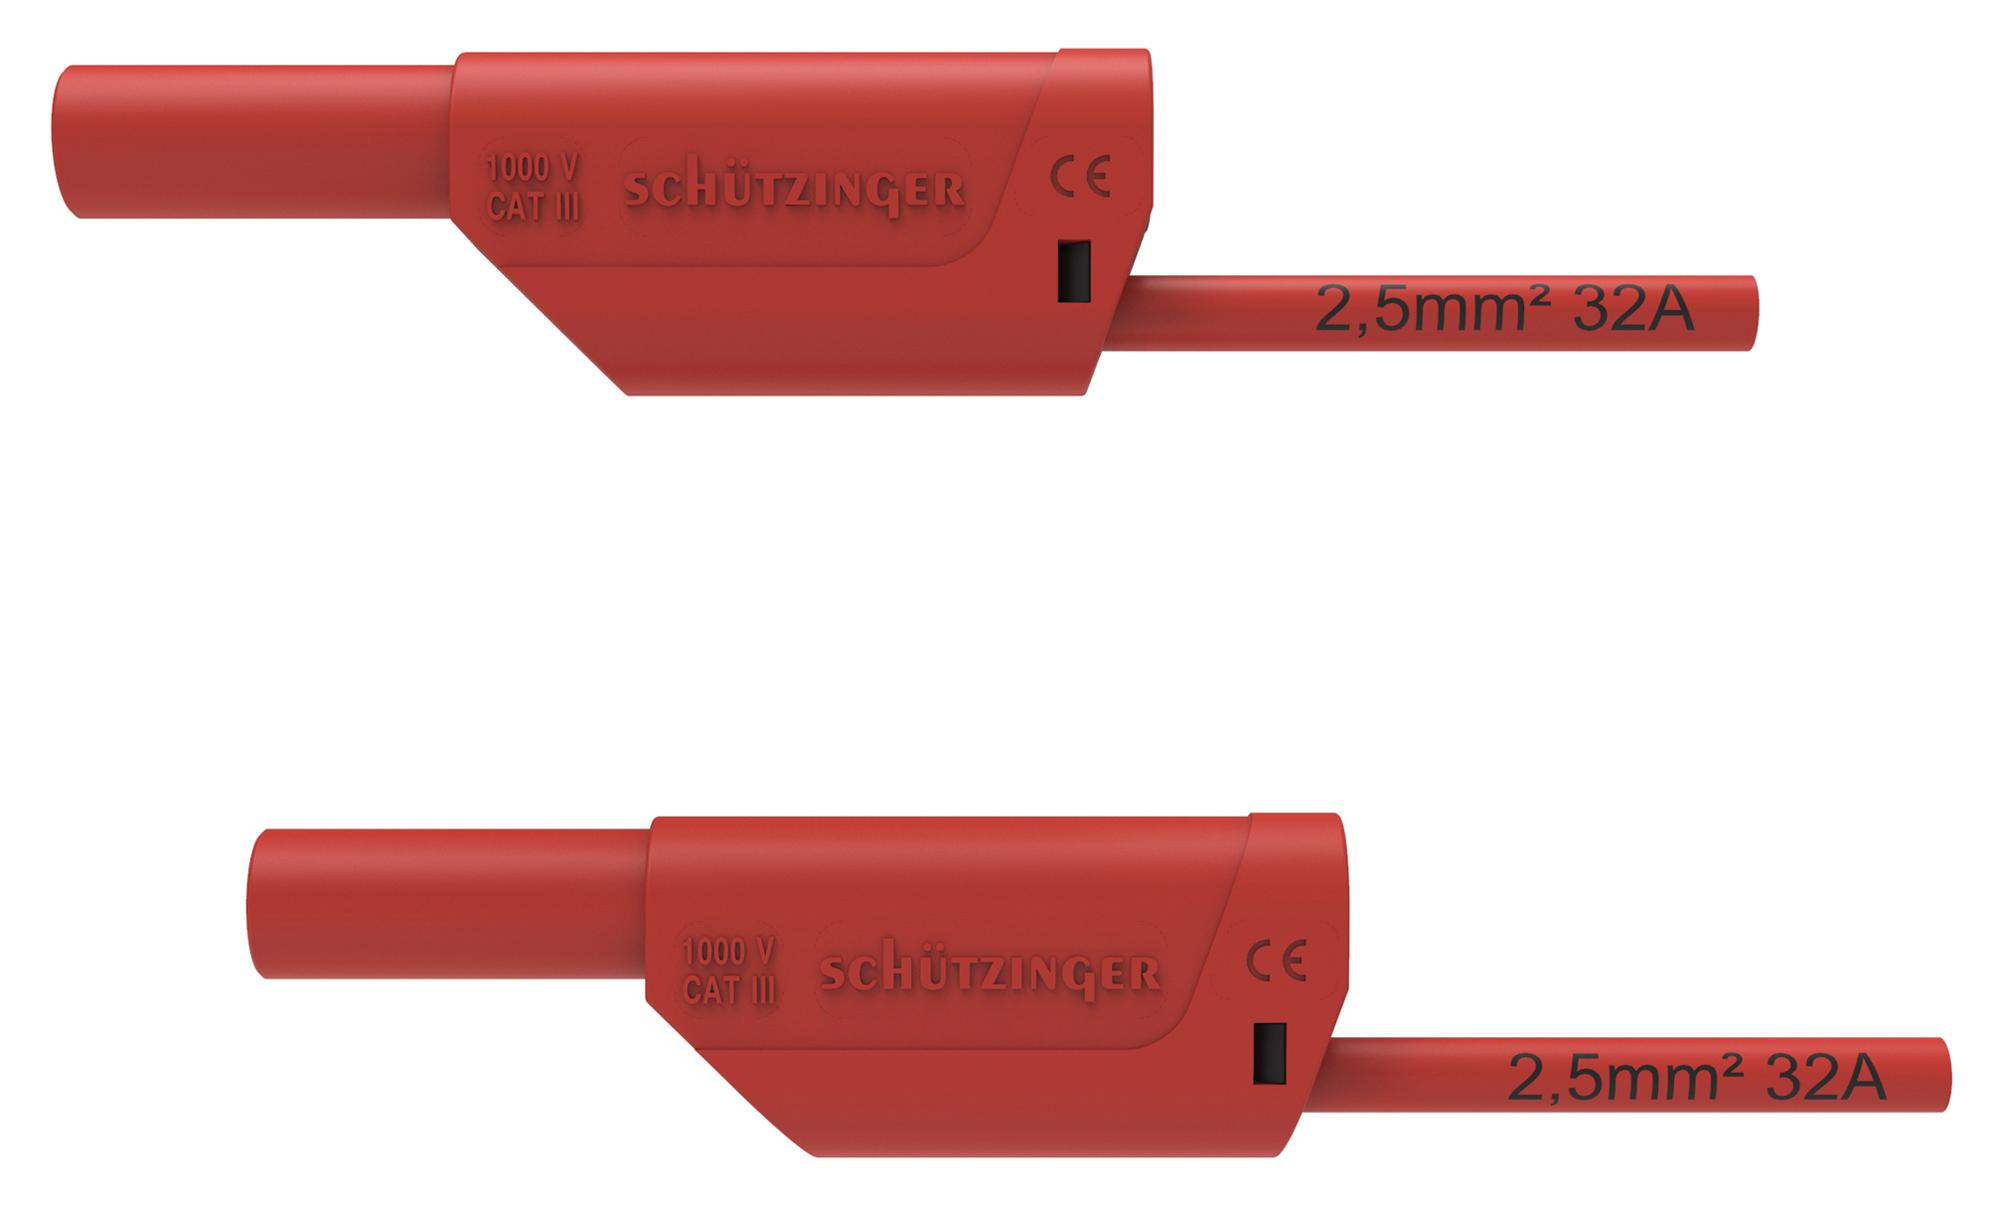 Schutzinger Di Vsfk 8700 / 2.5 / 50 / Rt 4mm Banana Plug-Sq, Shrouded, Red, 500mm